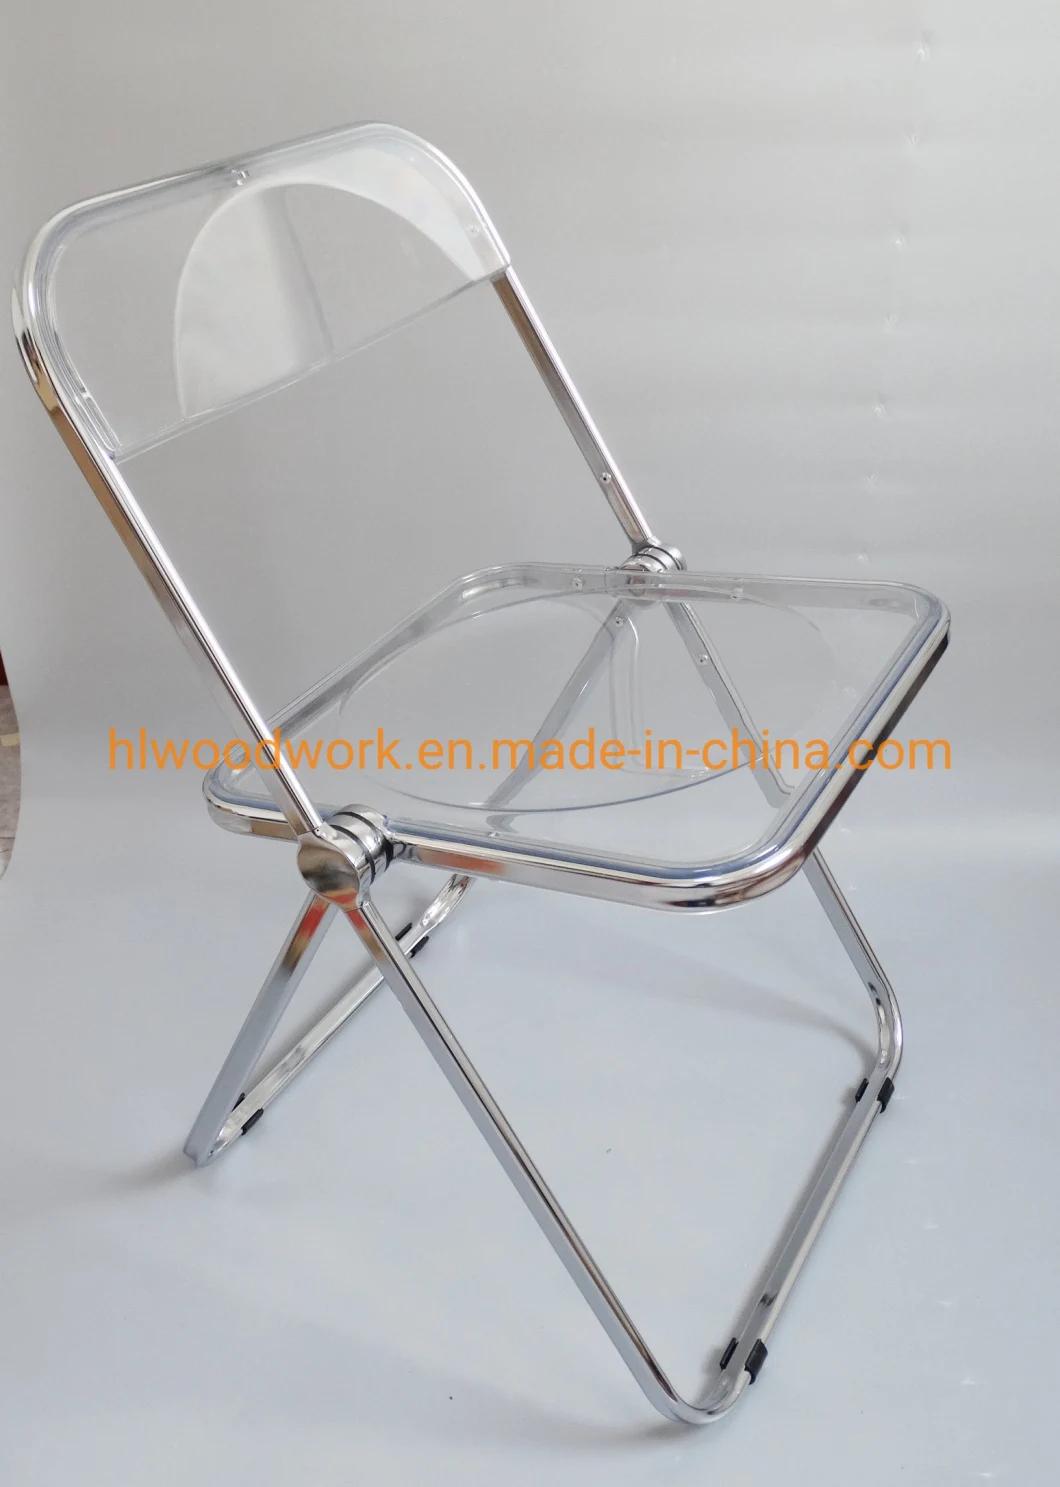 Modern Transparent Black Folding Chair PC Plastic Resteraunt Chair Chrome Frame Office Bar Dining Leisure Banquet Wedding Meeting Chair Plastic Dining Chair